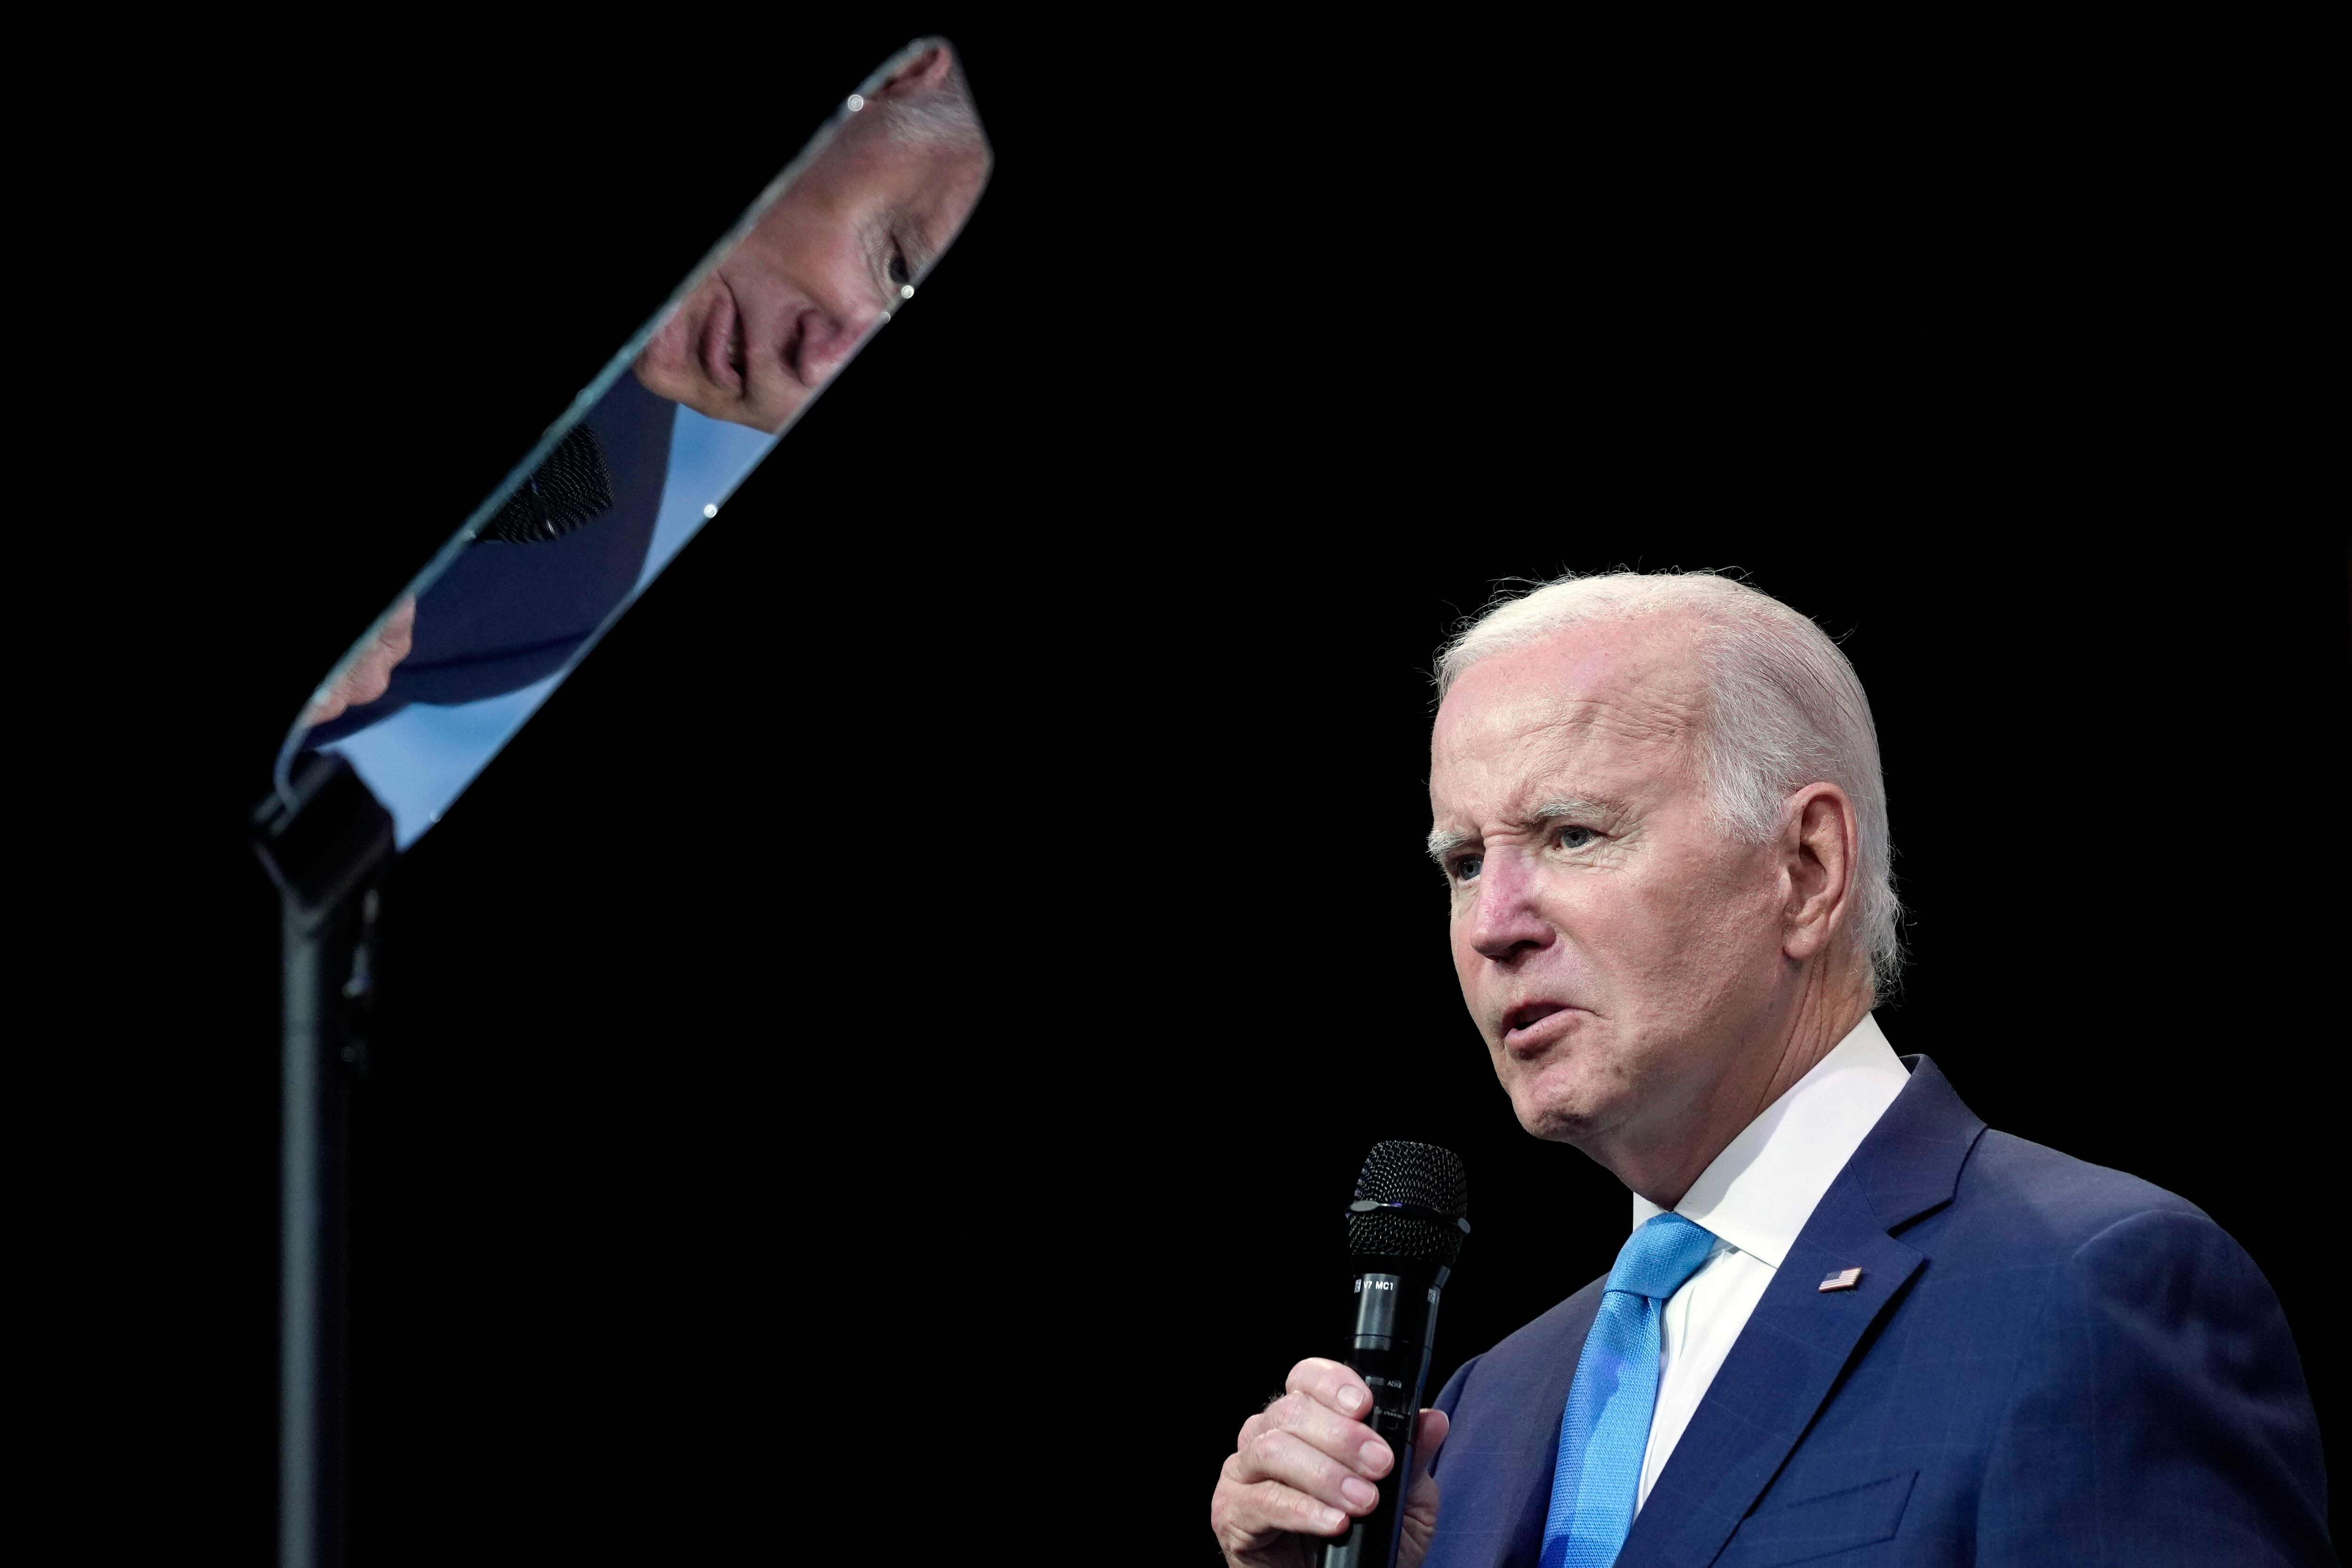 Play It Again, Joe. Biden bets that repeating himself is smart politics